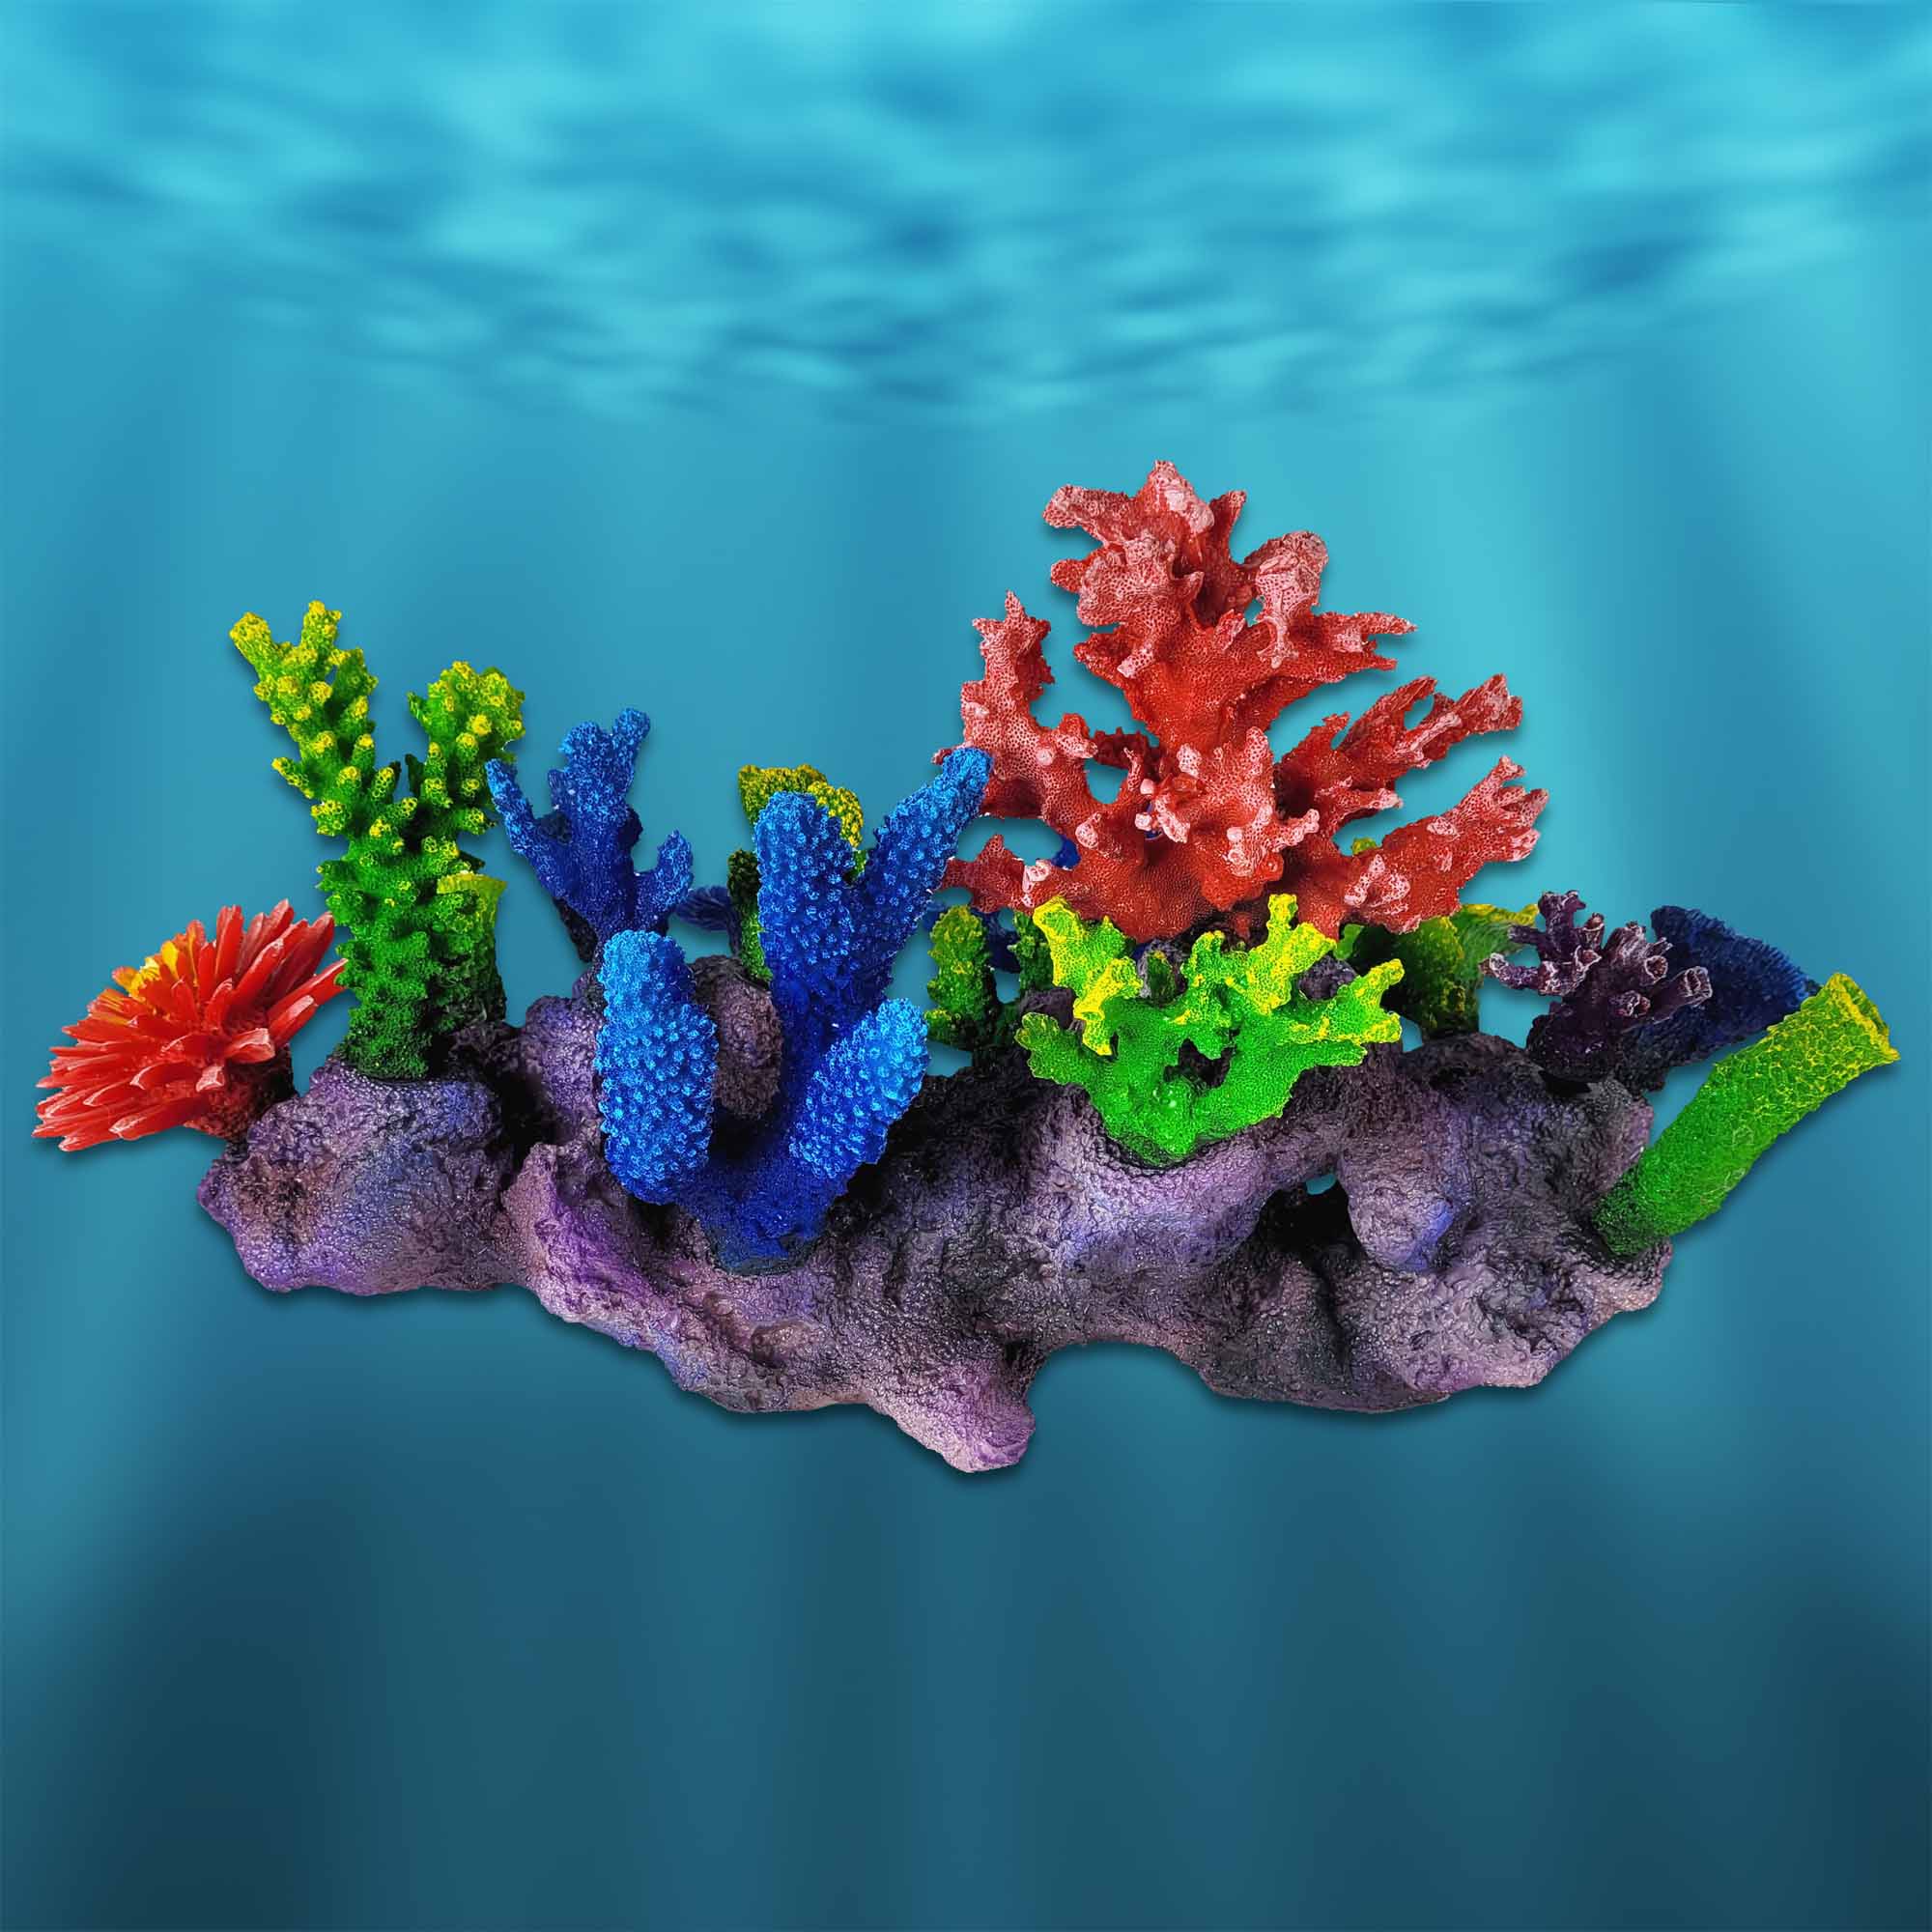 PNP470A Large Coral Reef Aquarium Decoration for Saltwater Fish Tanks